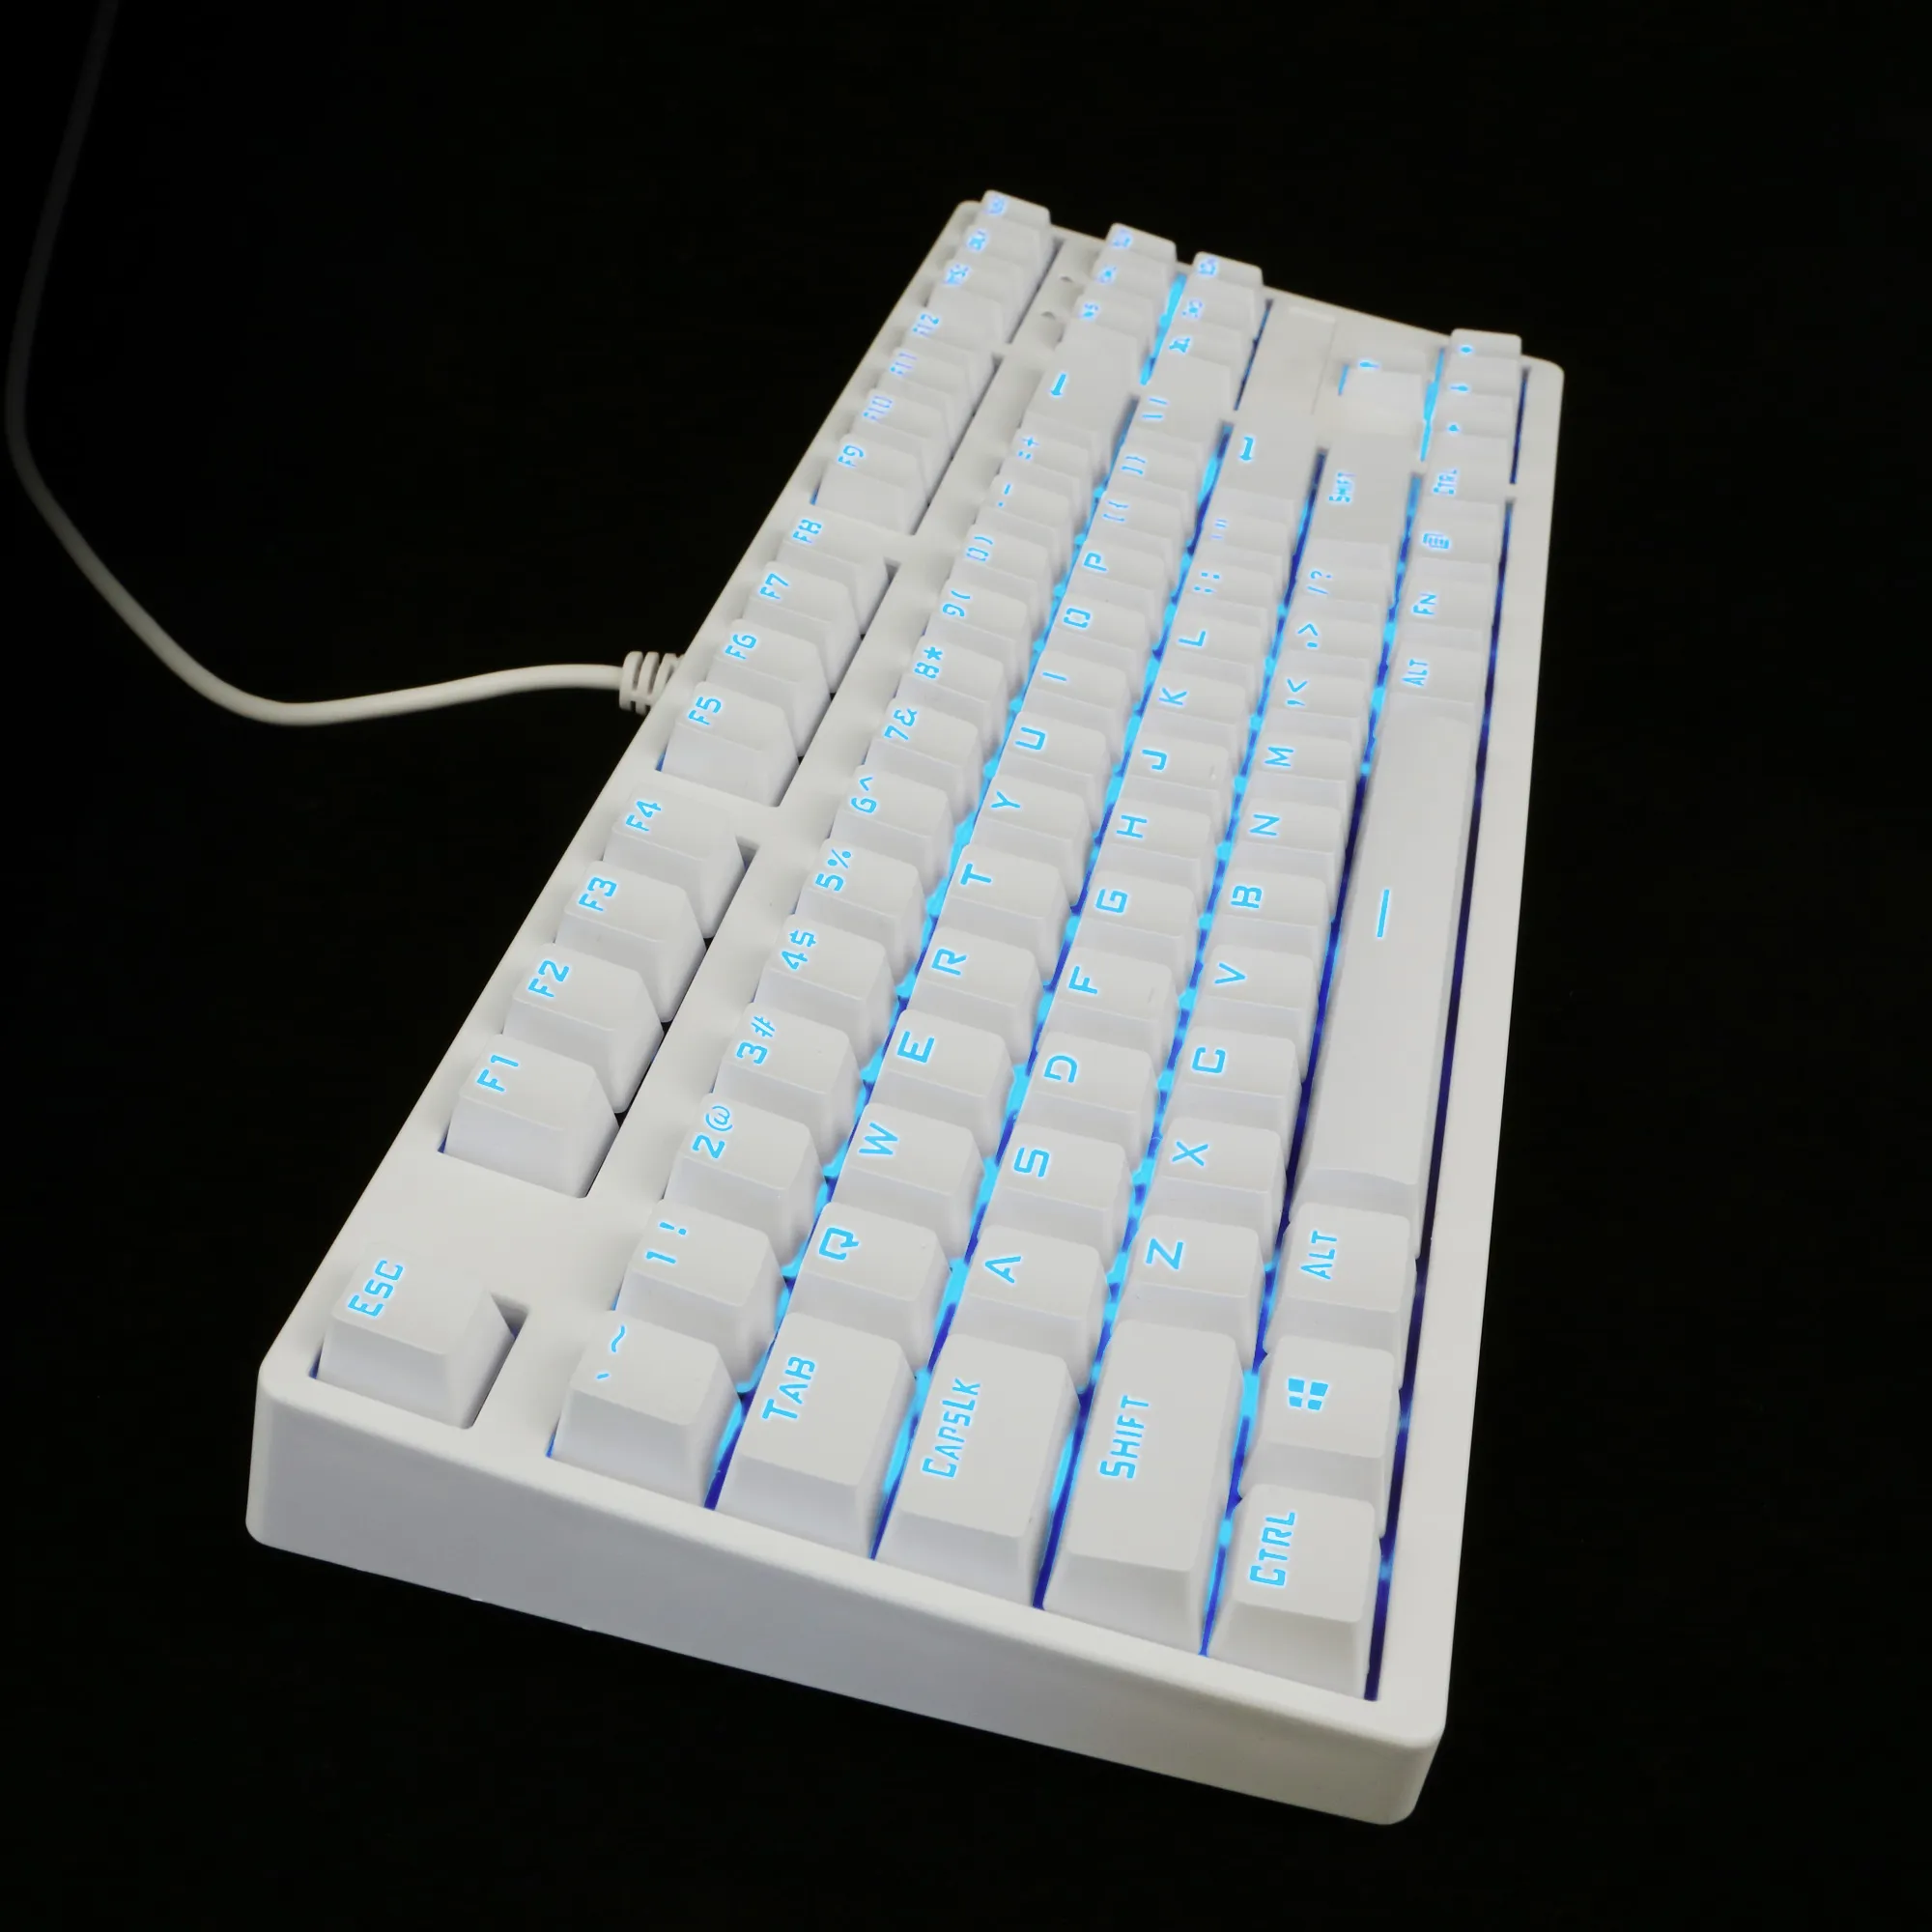 Shenzhen Keyboard Mouse Supplier Gaming Mechanical Keyboard with 87 Mechanical Keys